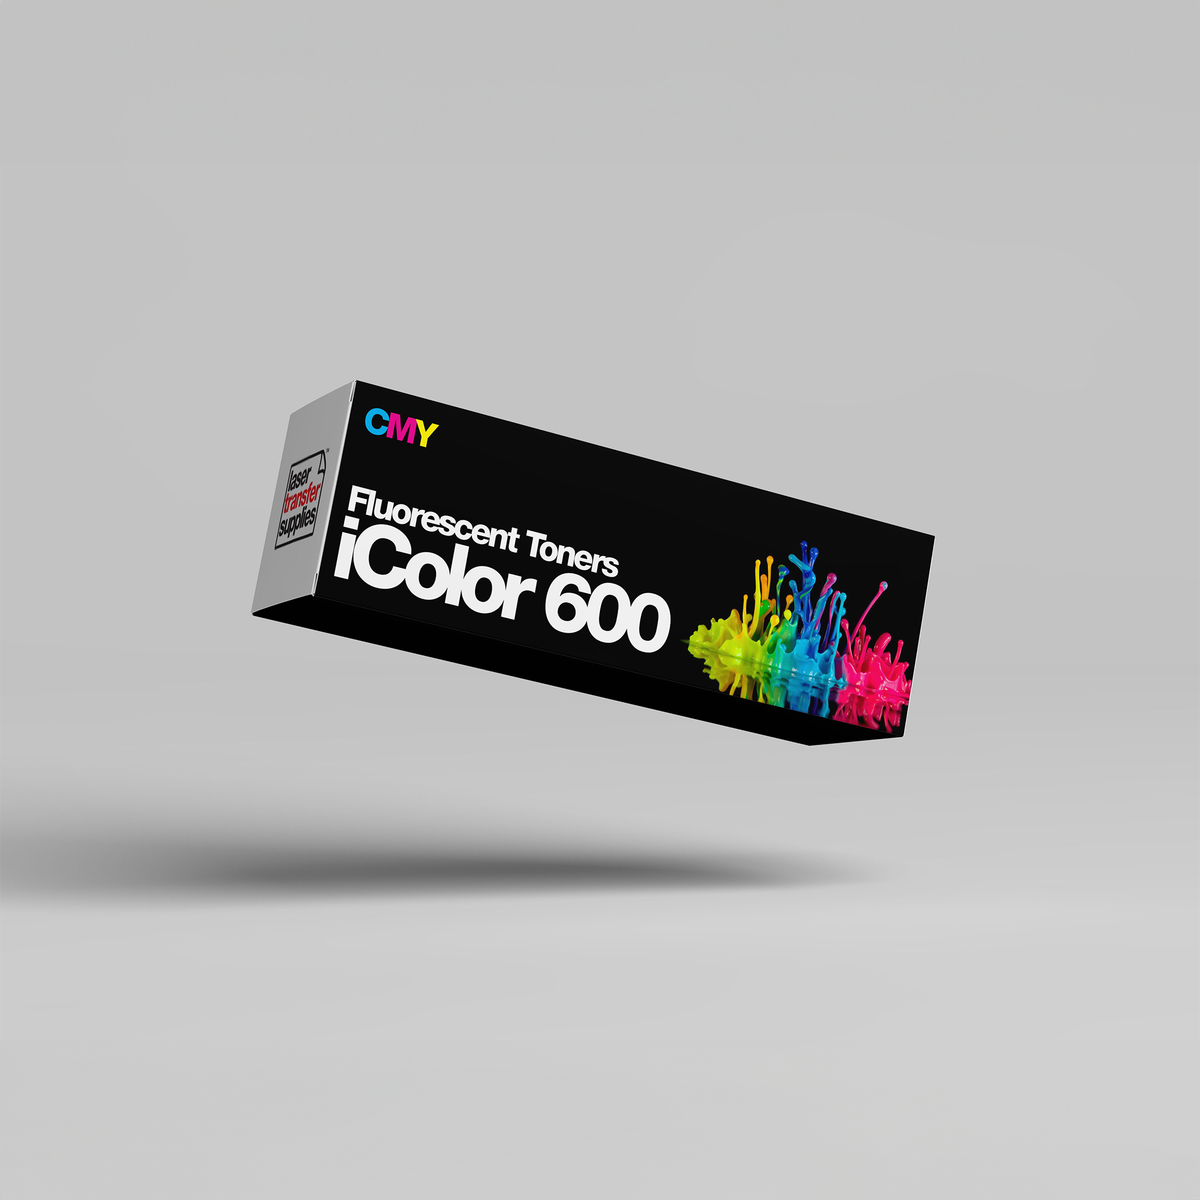 IColor 600 Fluorescent Toner